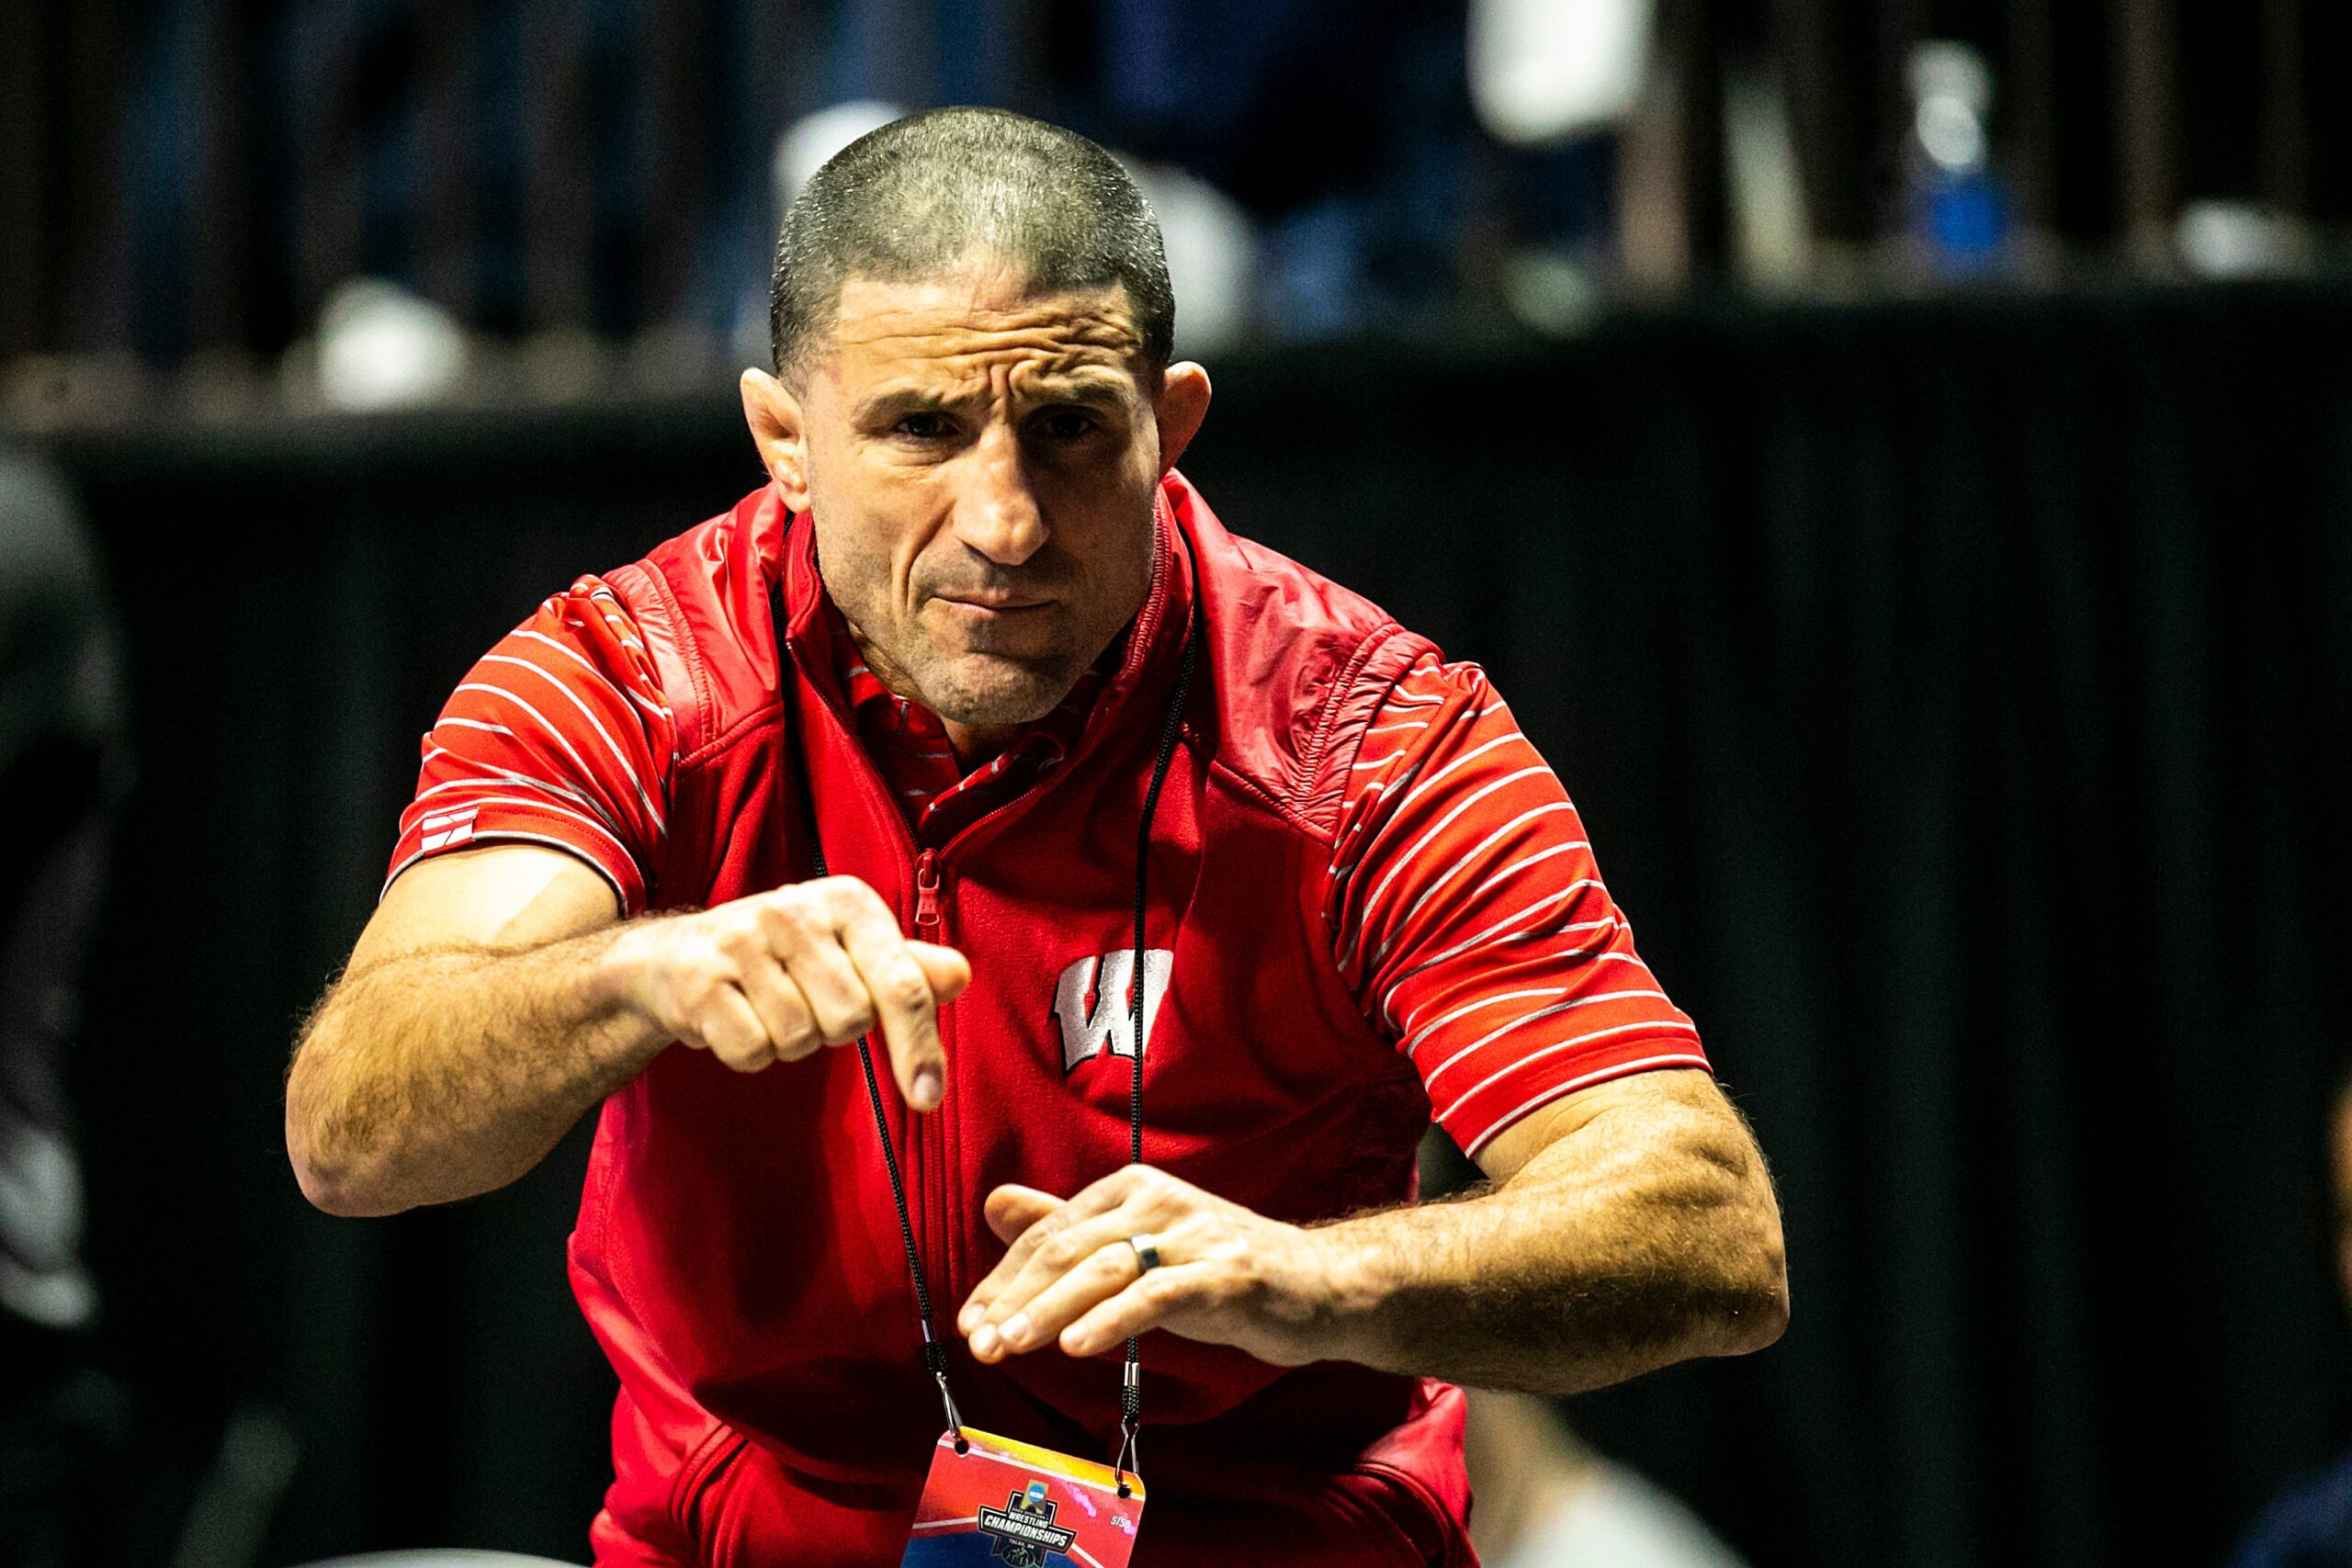 Wisconsin Badgers wrestling coach Chris Bono